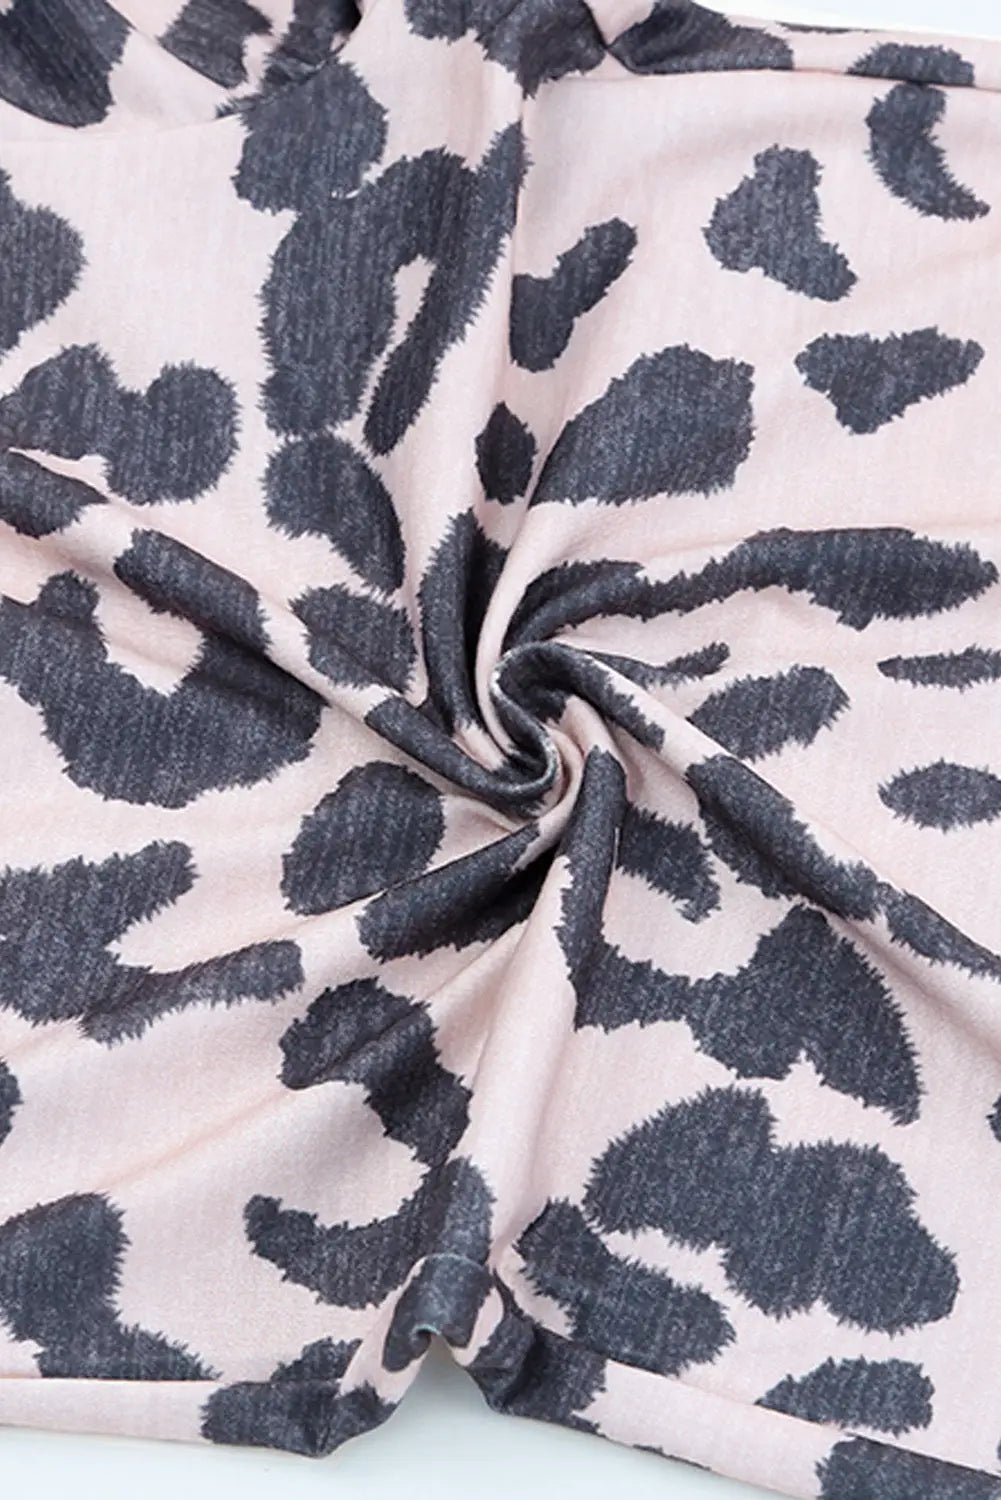 Leopard print pockets wide leg sleeveless jumpsuit - jumpsuits & rompers